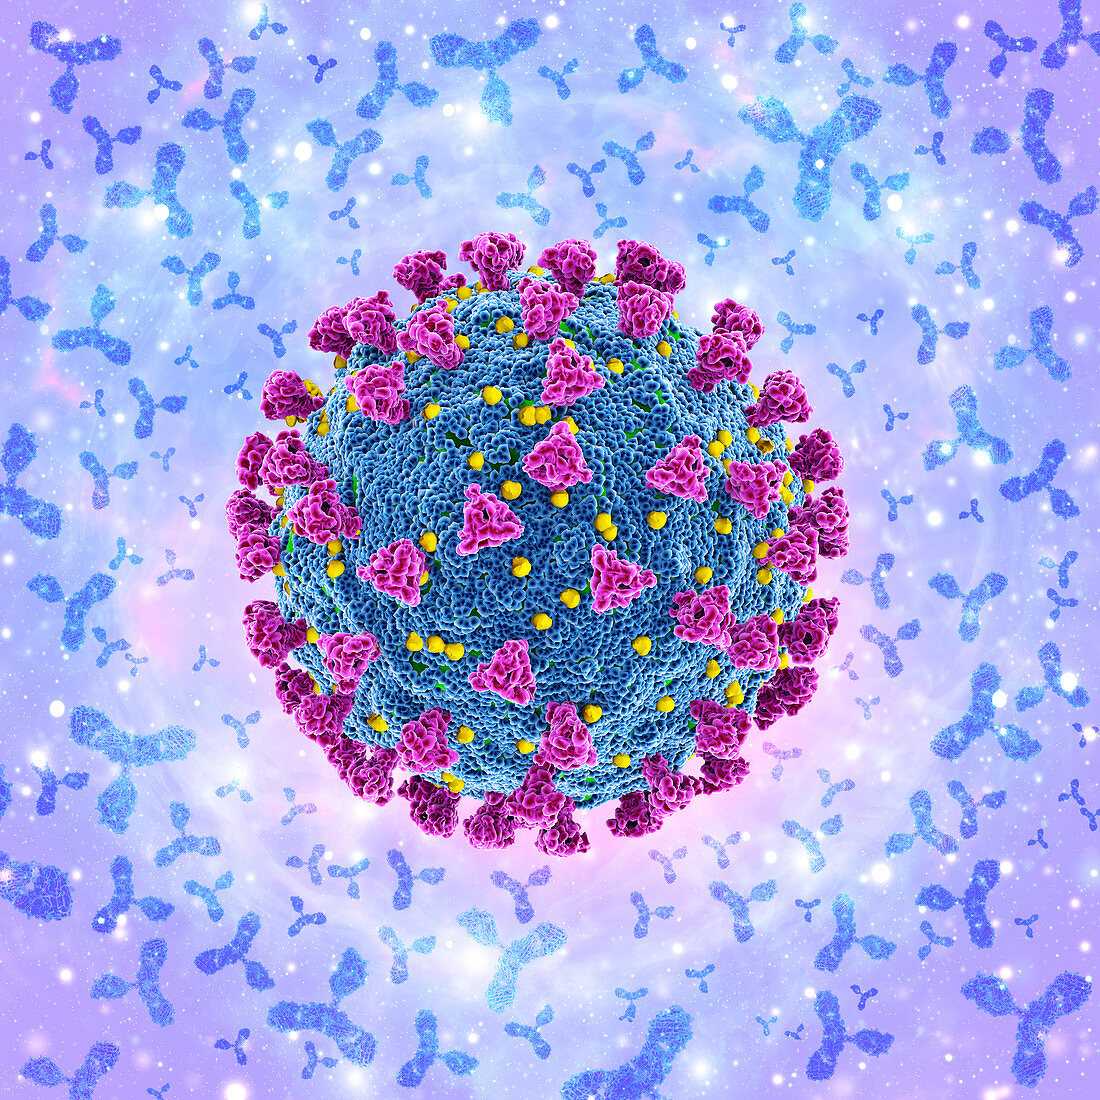 Antibodies and covid-19 coronavirus, illustration